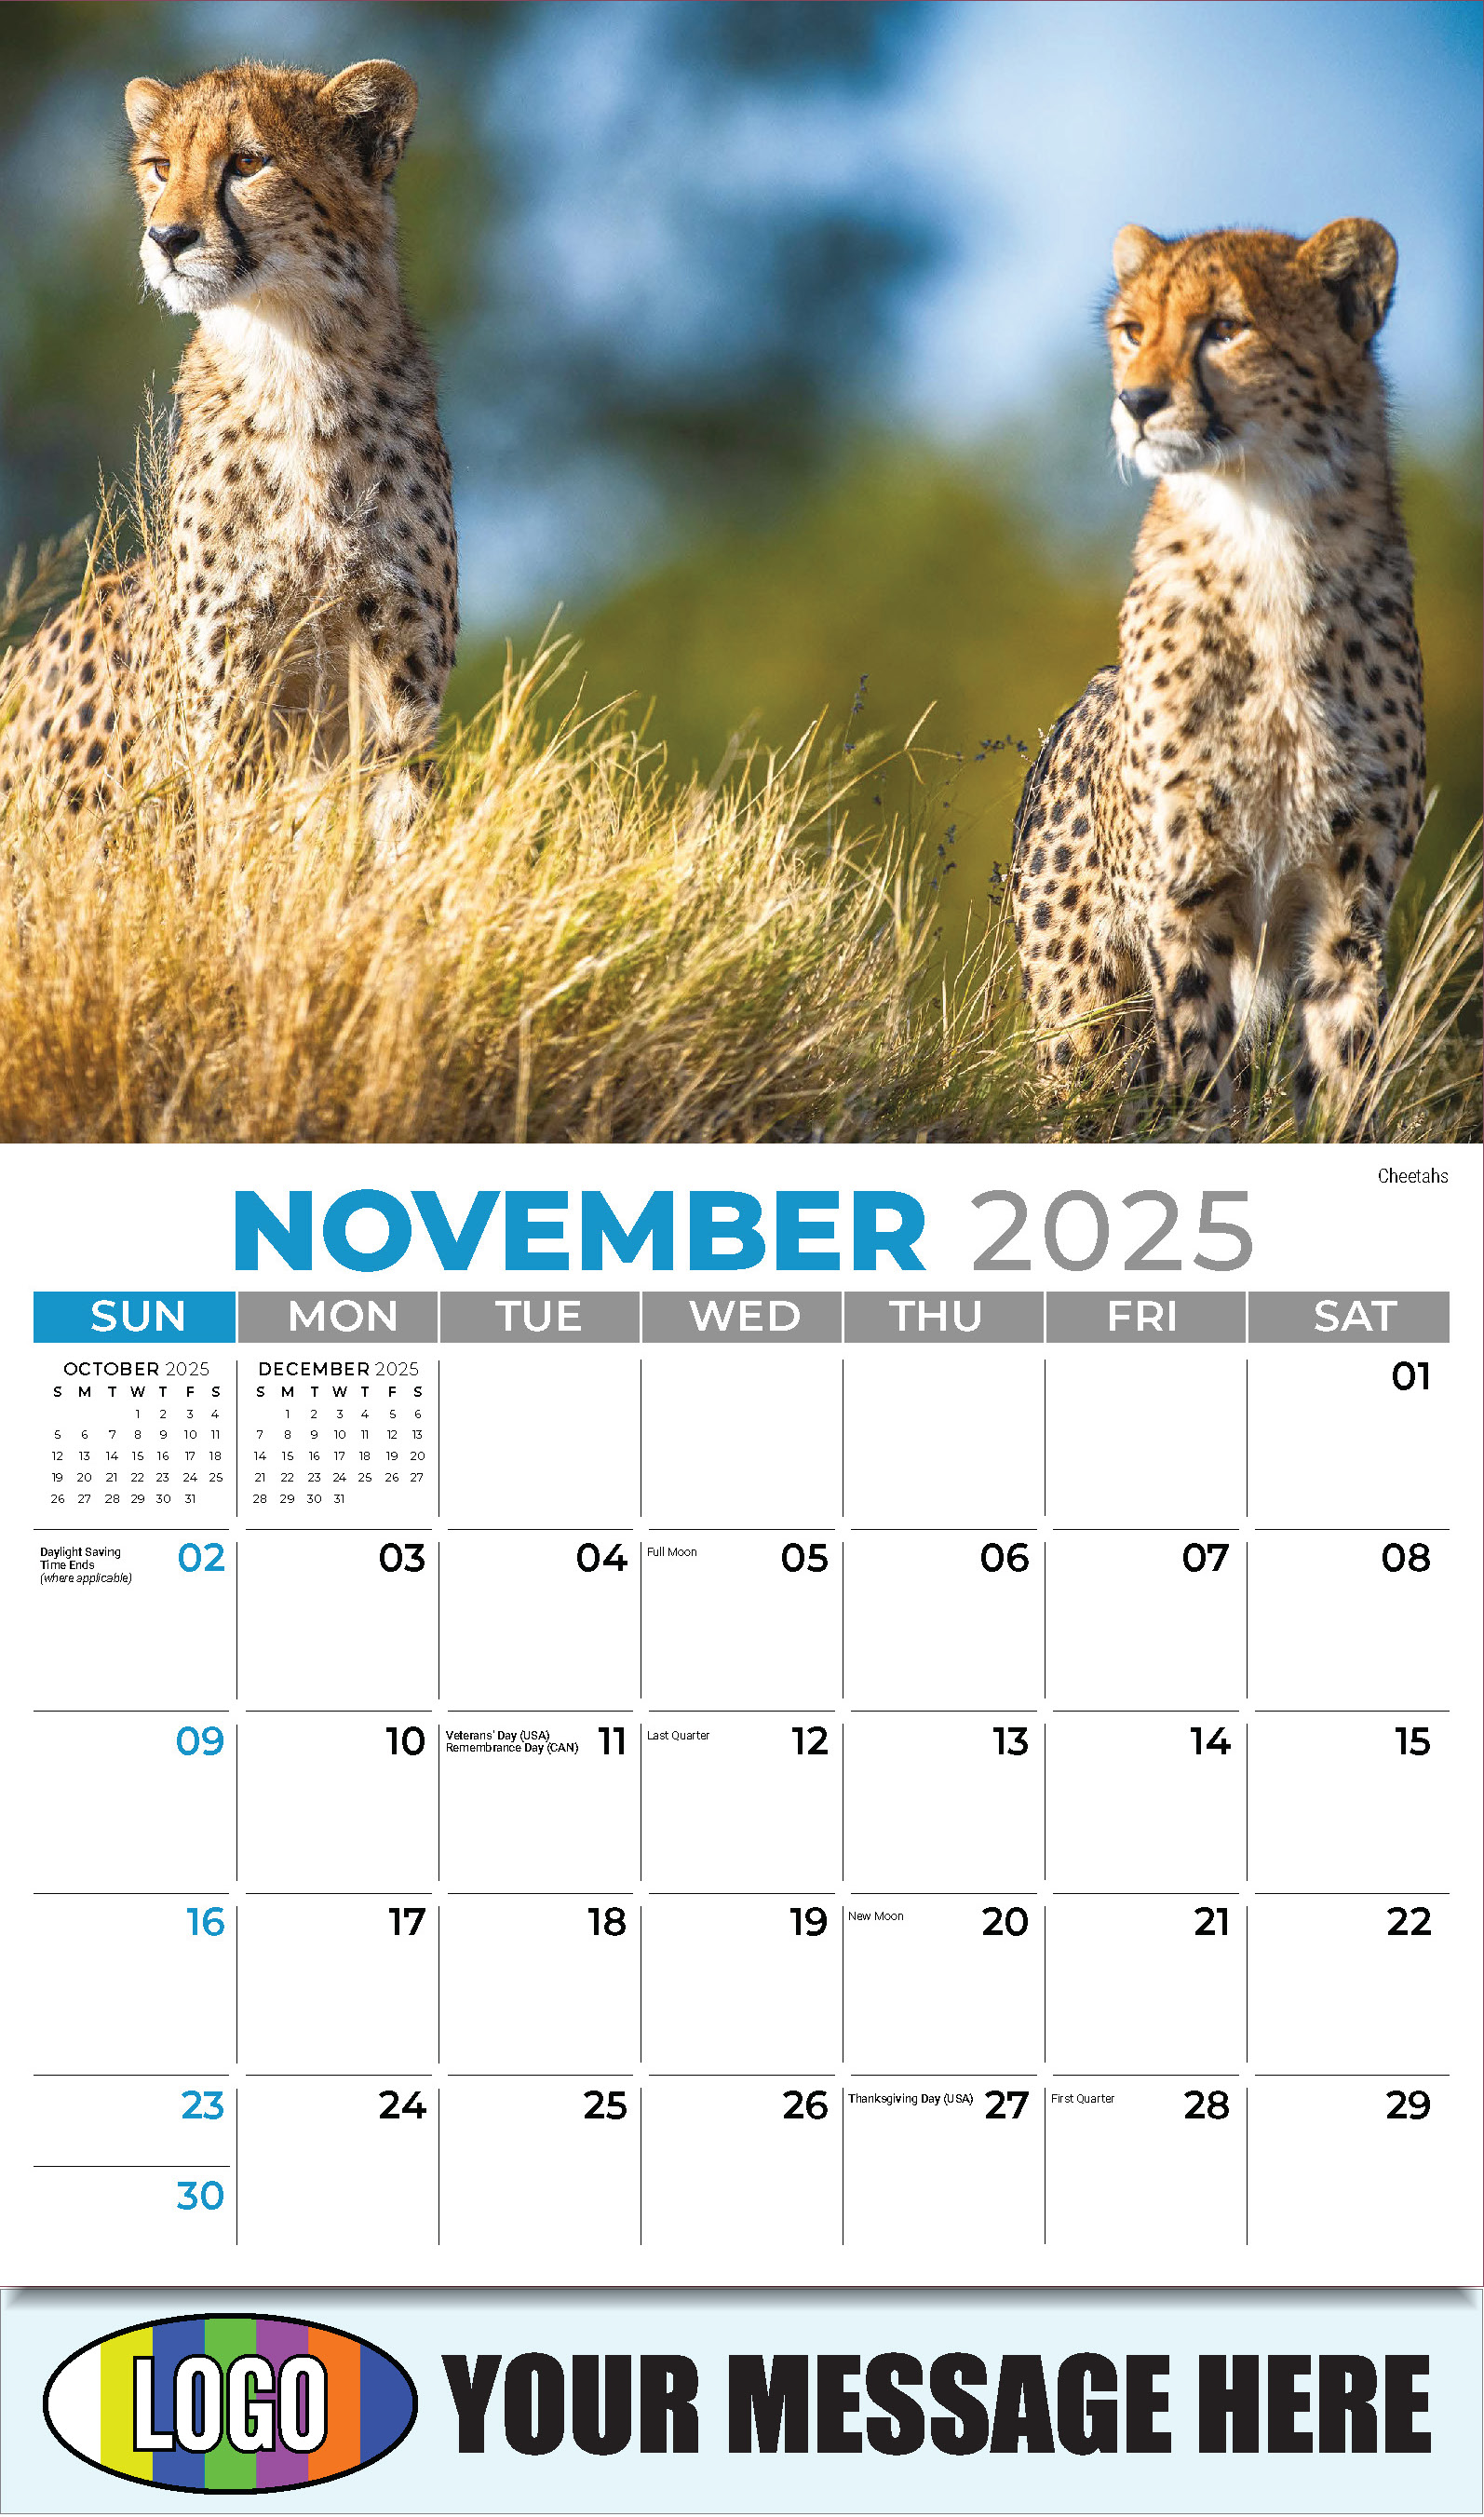 International Wildlife 2025 Business Advertising Wall Calendar - November